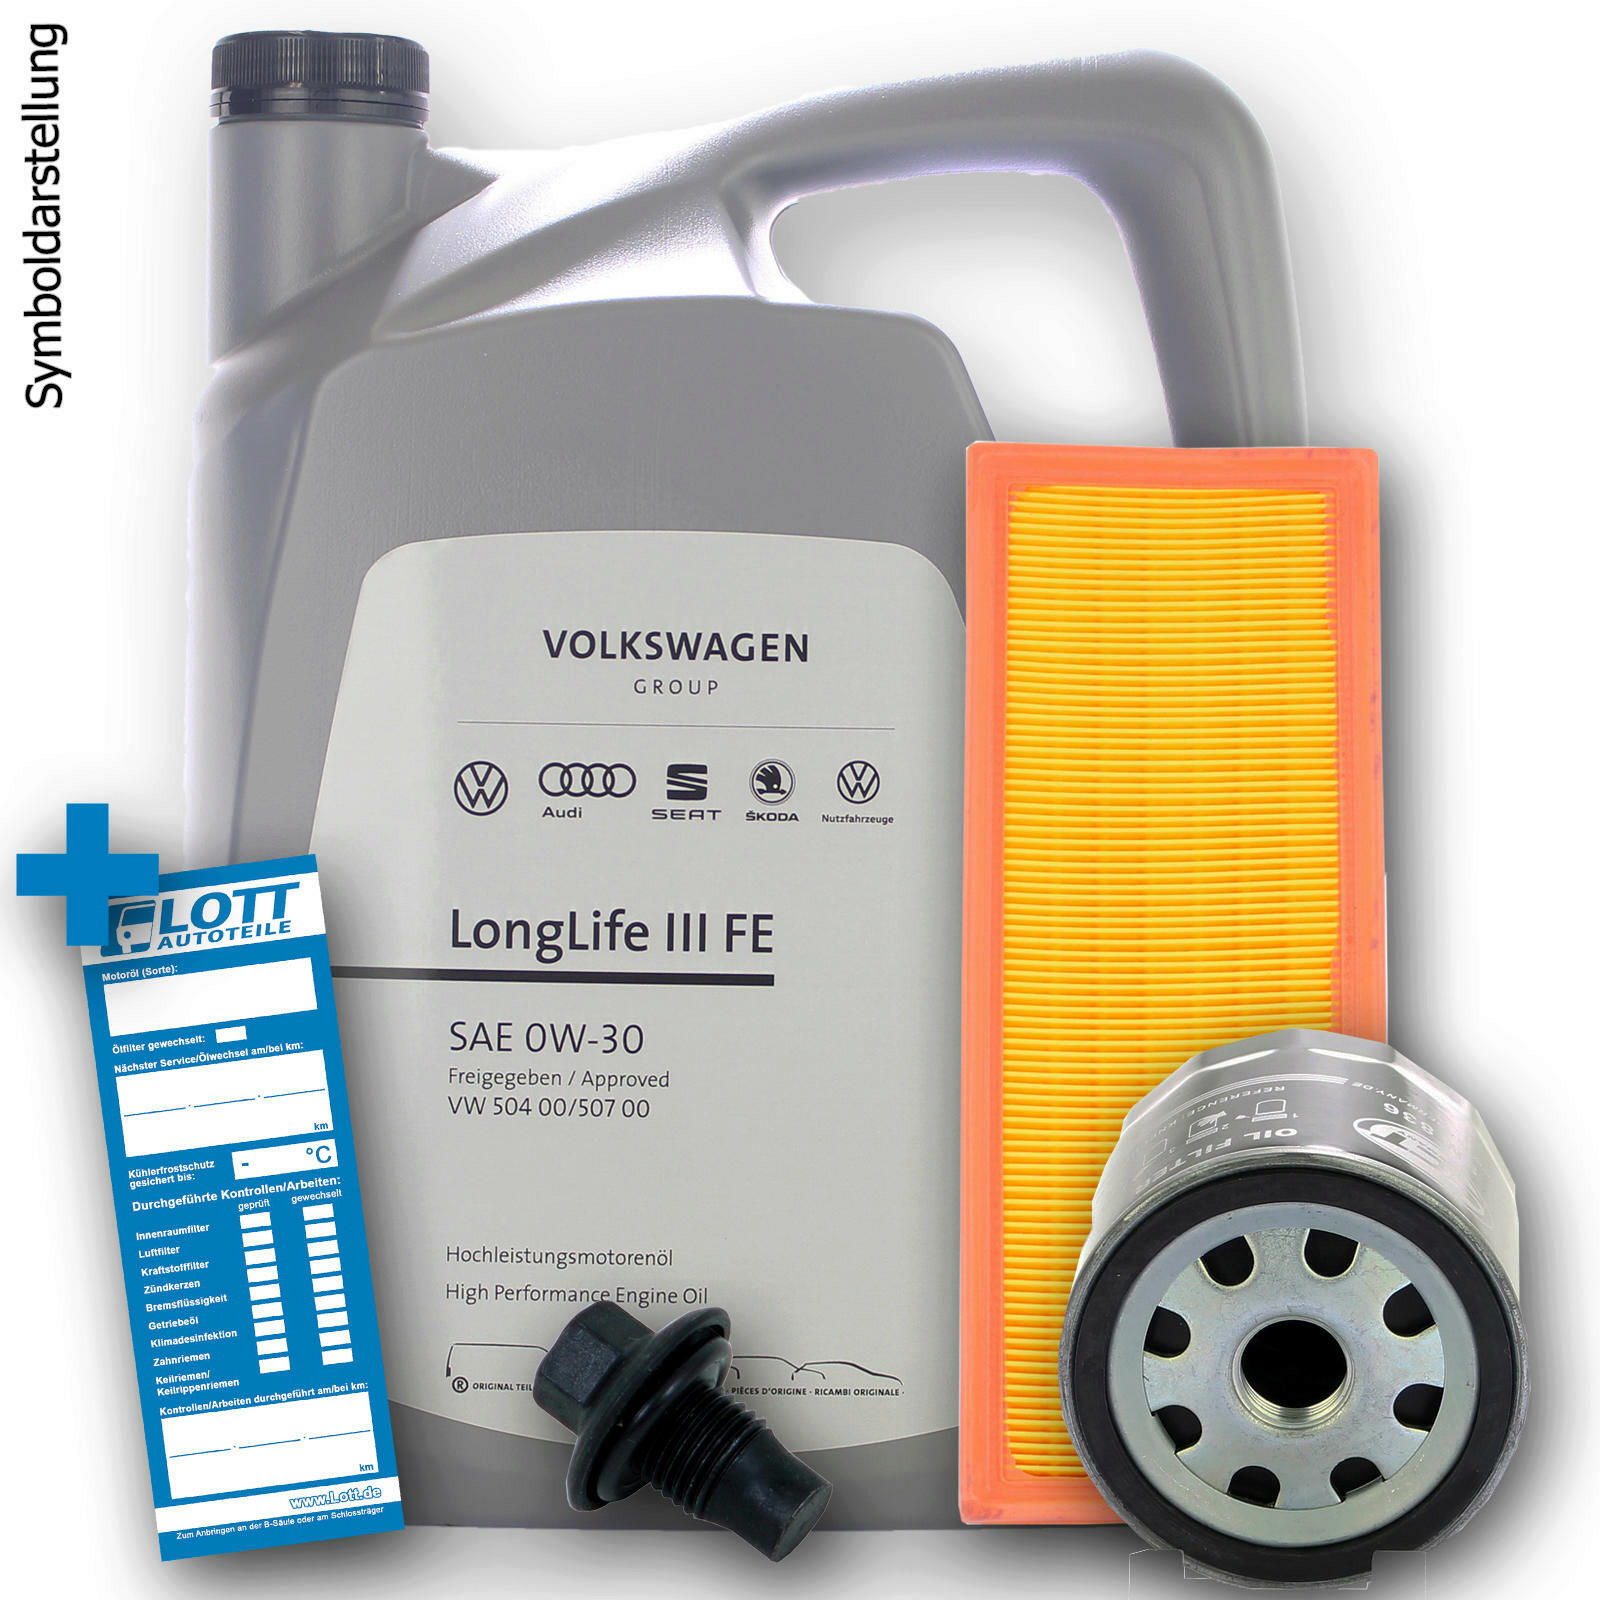 VW Motoröl + Ölfilter + Luftfilter + Ablassschraube